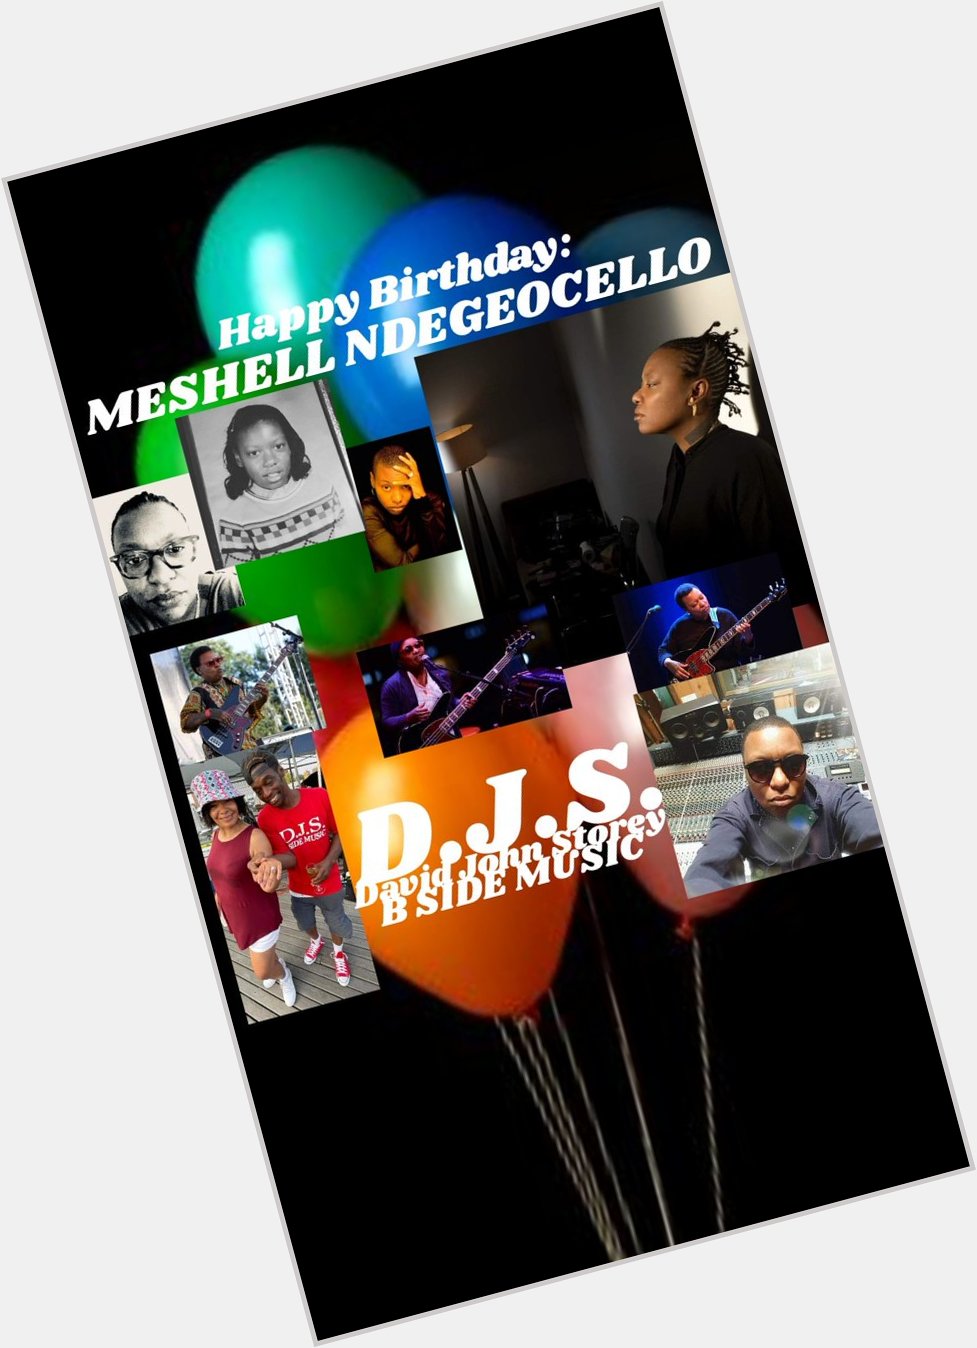 I(D.J.S.) wish Singer/Songwriter/Rapper/Bassist: \"MESHELL NDEGEOCELLO\" Happy Birthday!!! 